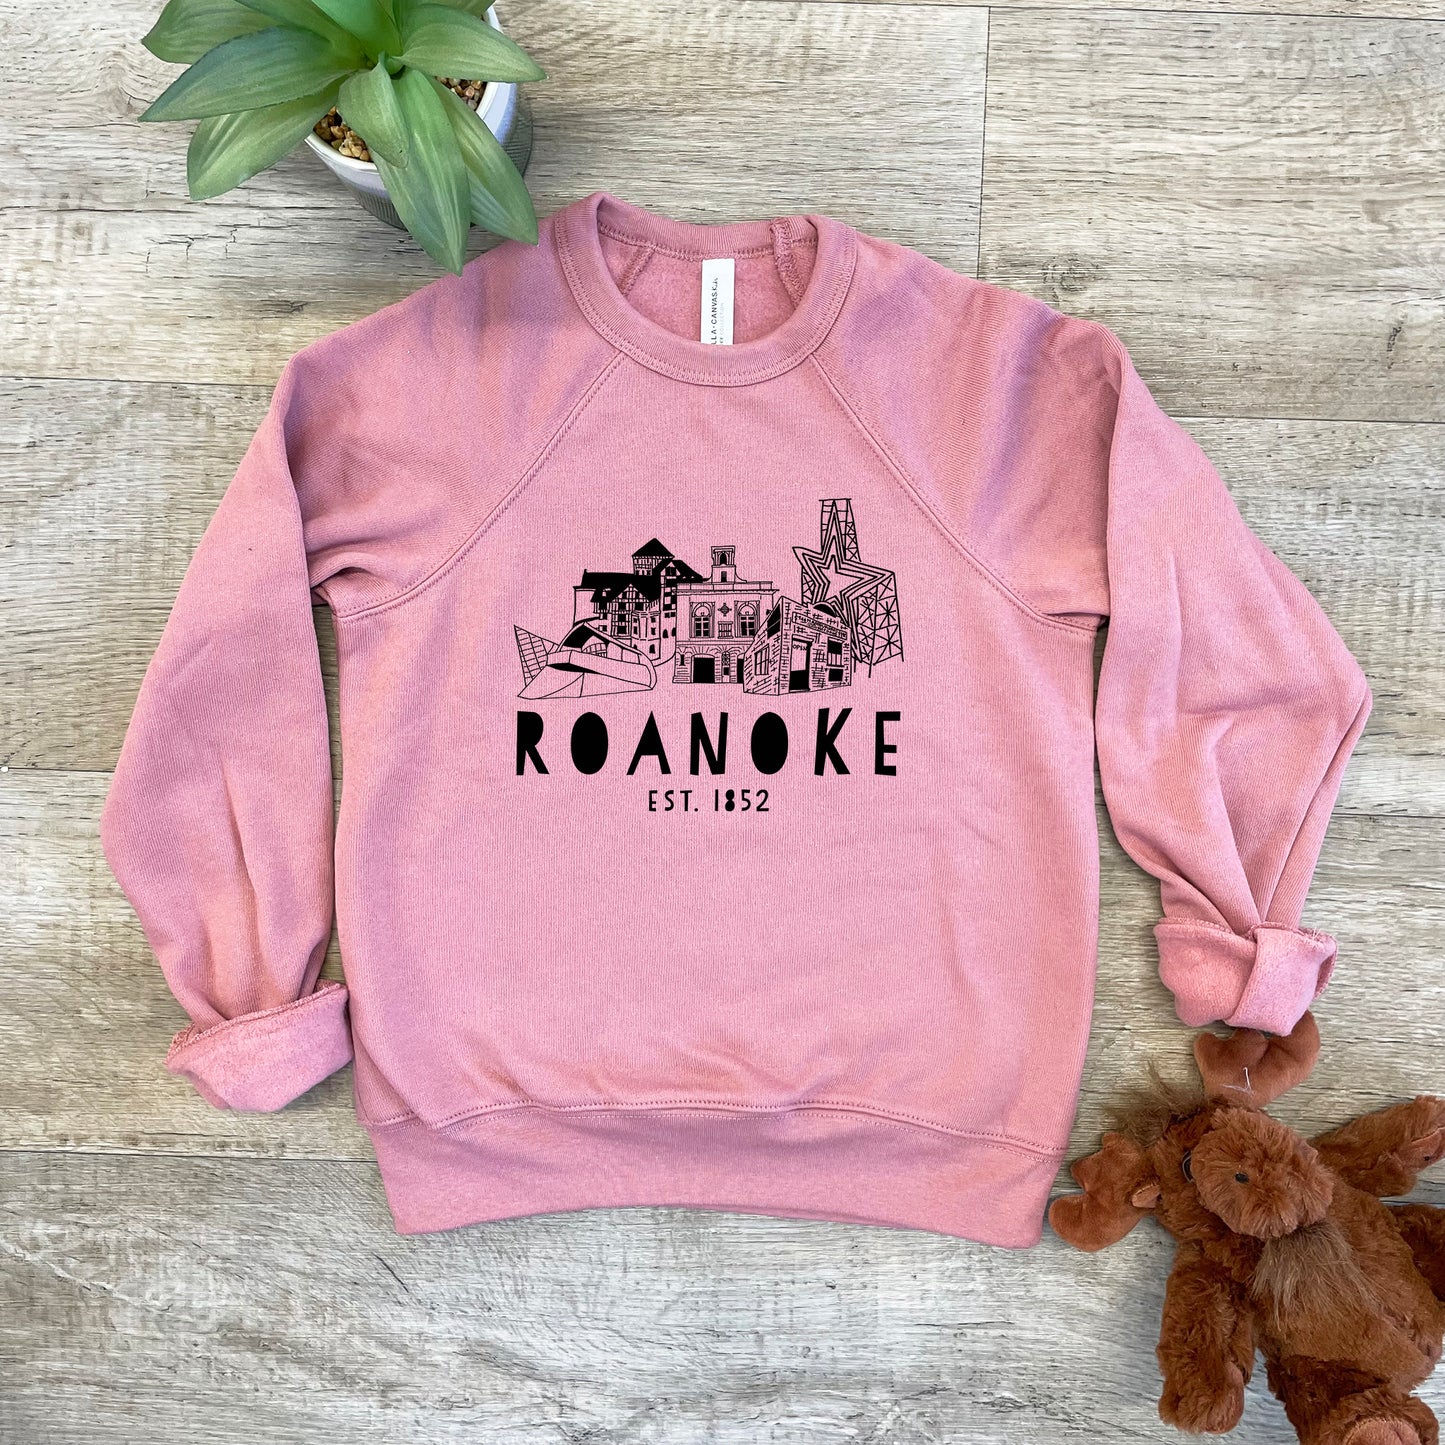 Roanoke, Virginia (VA) - Kid's Sweatshirt - Heather Gray or Mauve